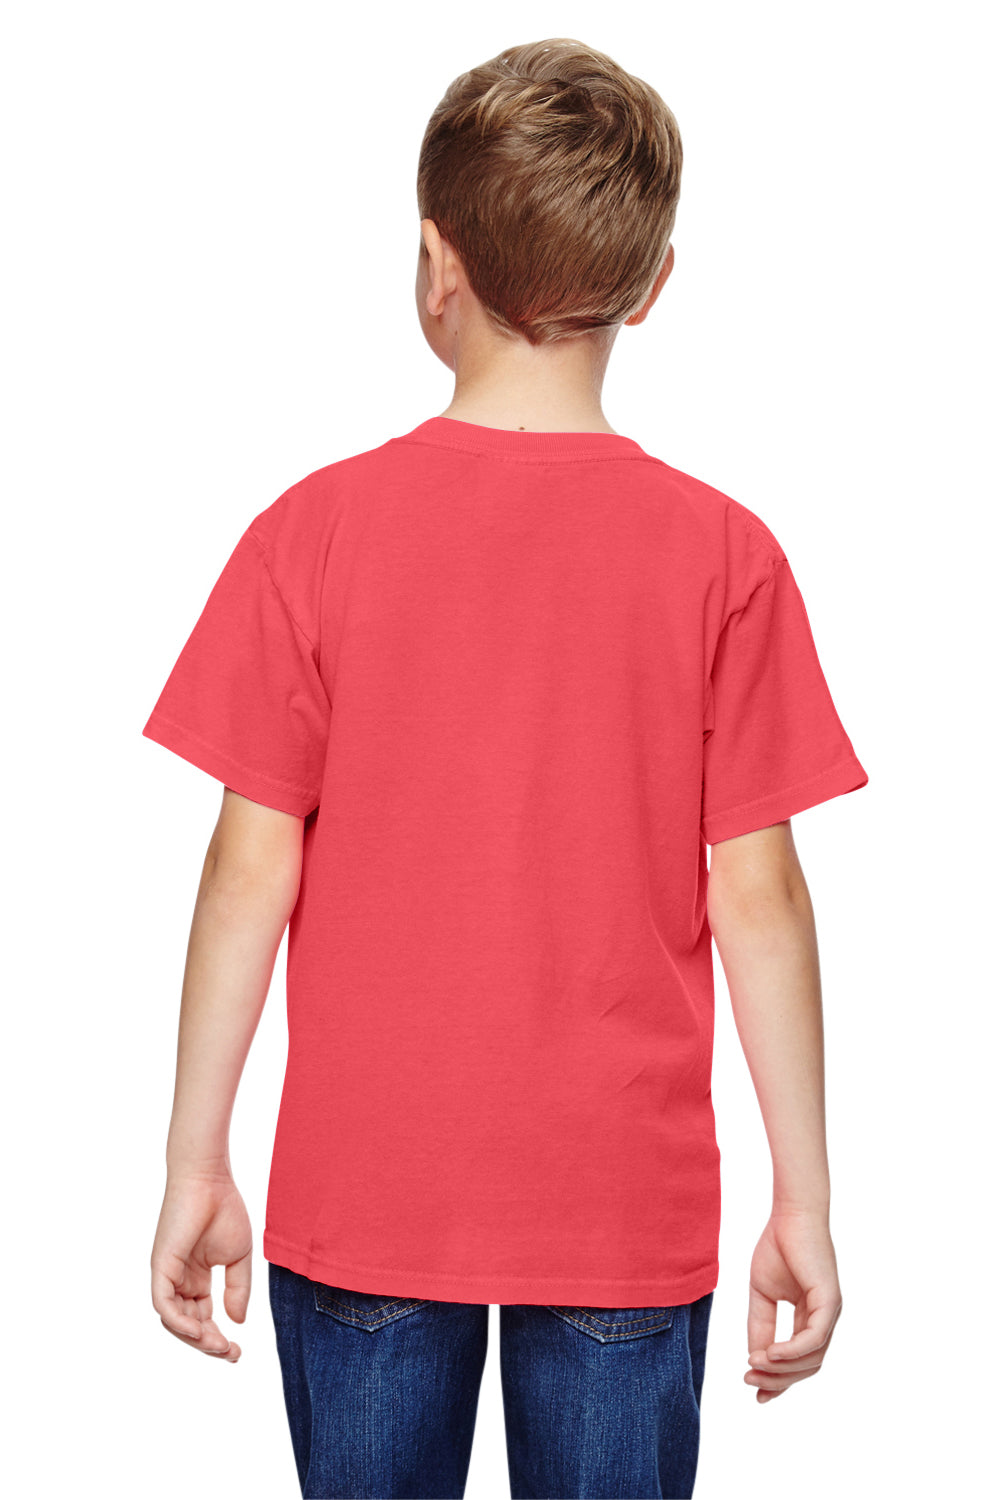 Comfort Colors C9018 Youth Short Sleeve Crewneck T-Shirt Neon Red Orange Back